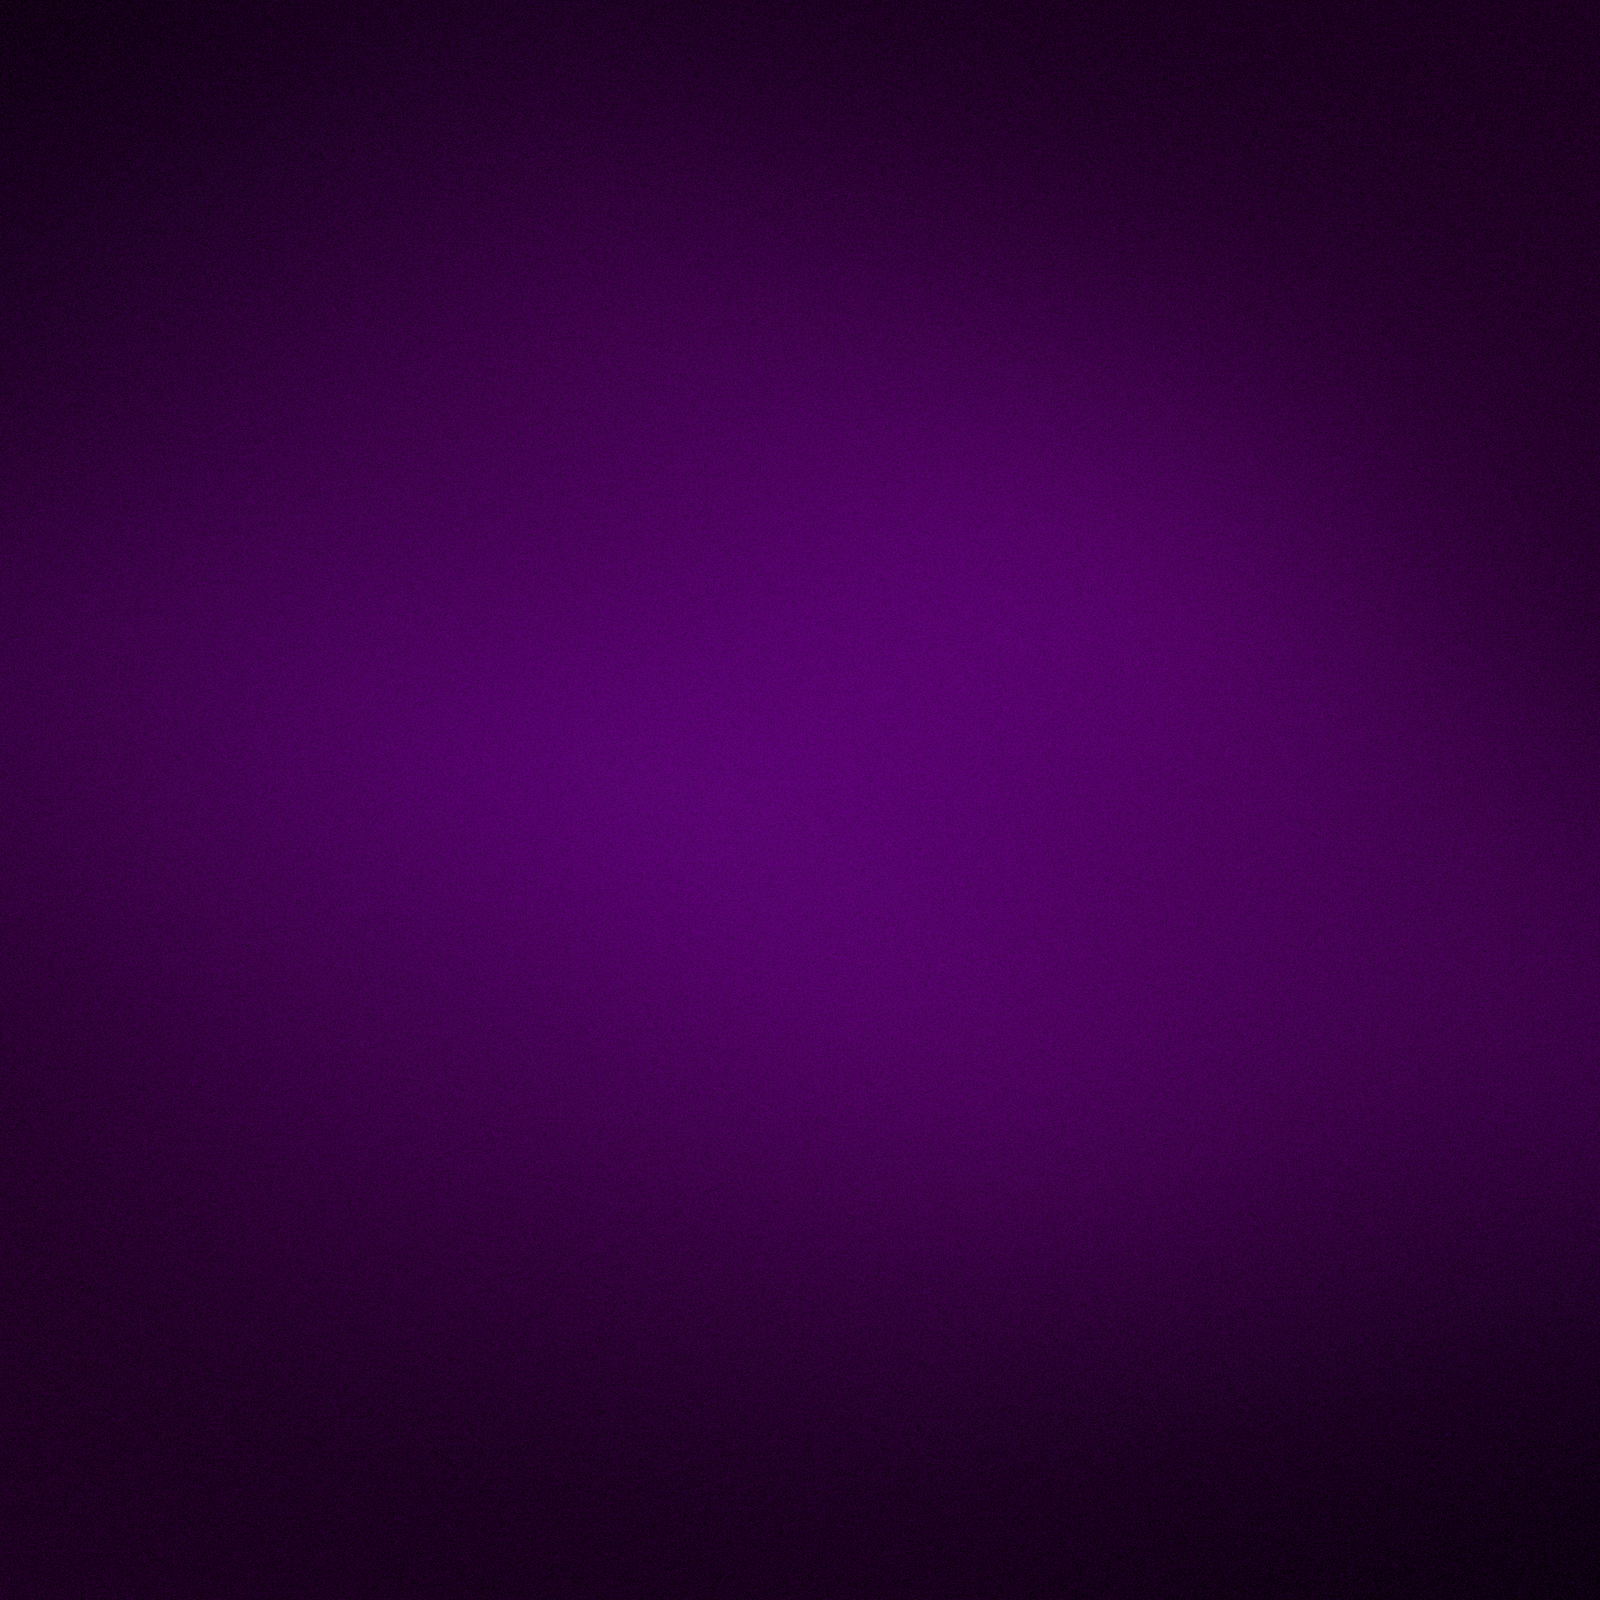 Elegant Purple Background Texture